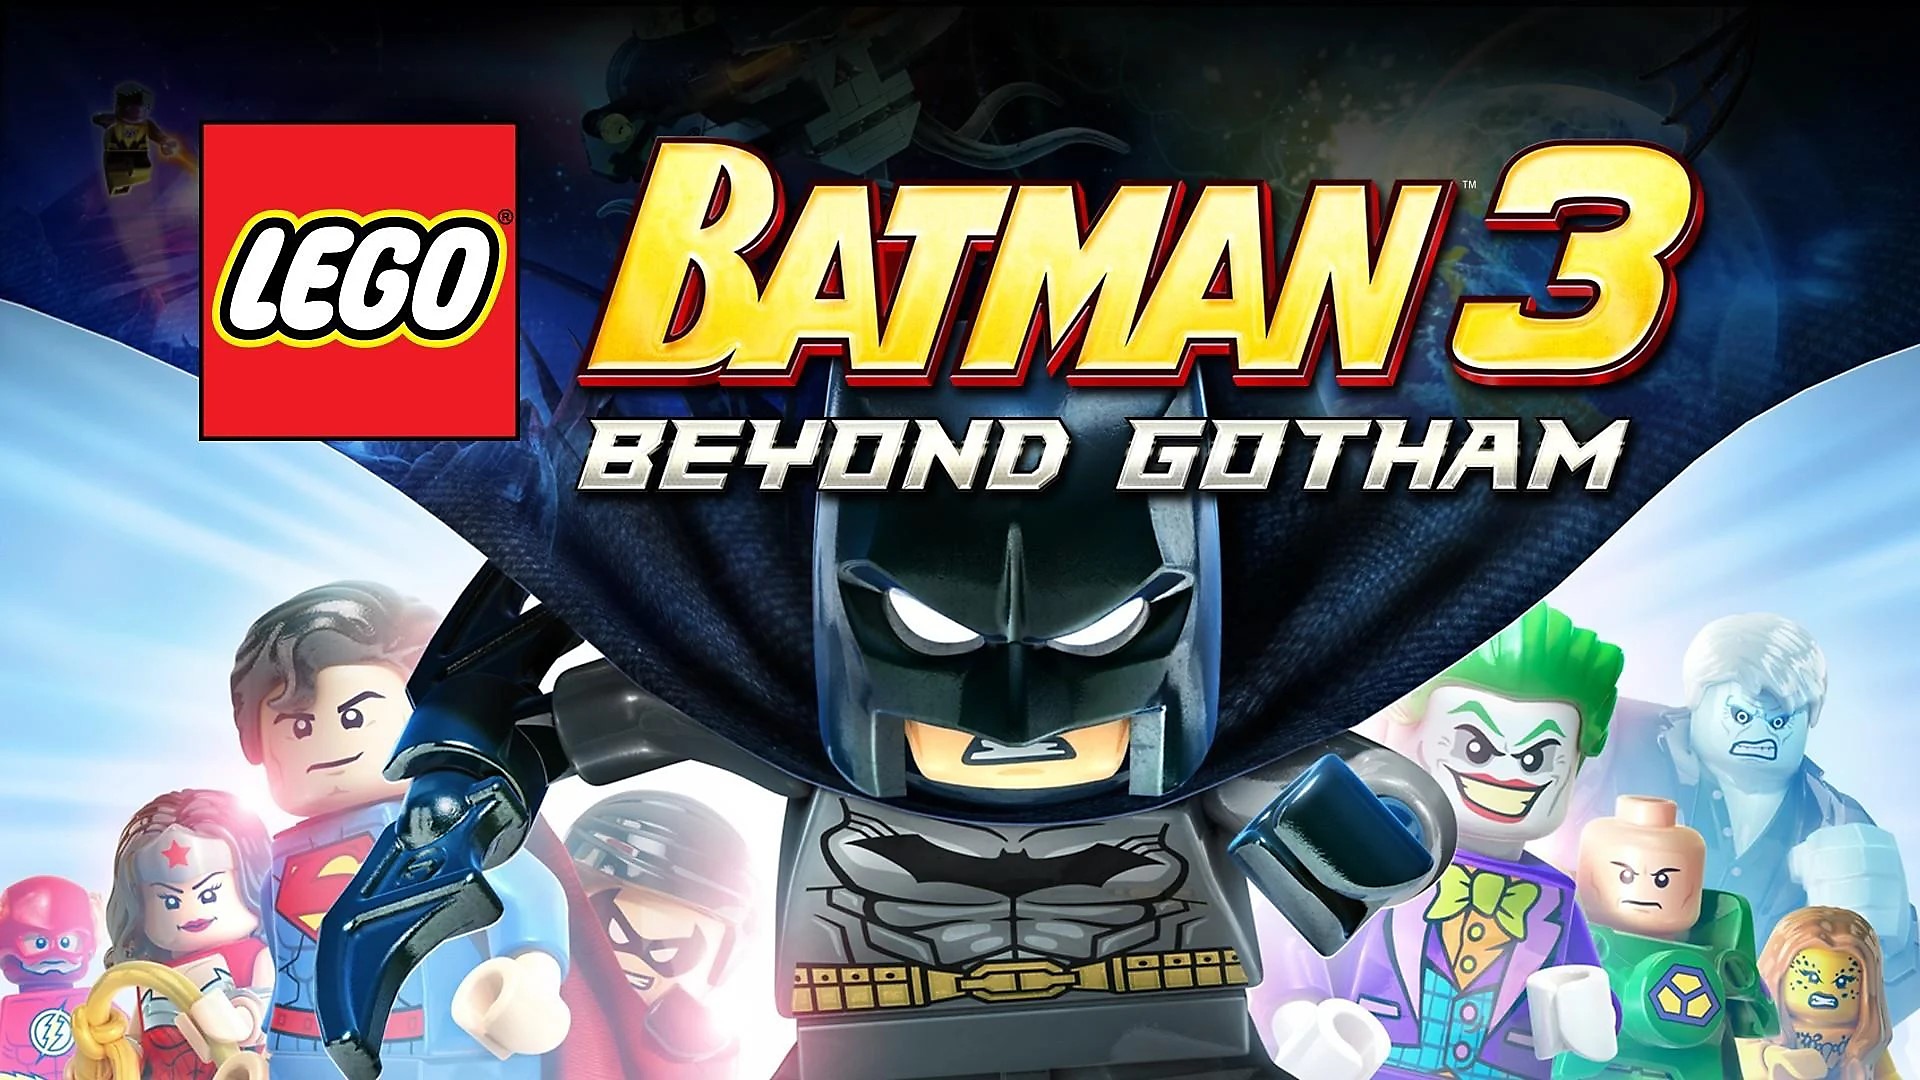 LEGO Batman 3: Beyond Gotham – trailer | E3 2014 | PS4, PS3 og PS Vita